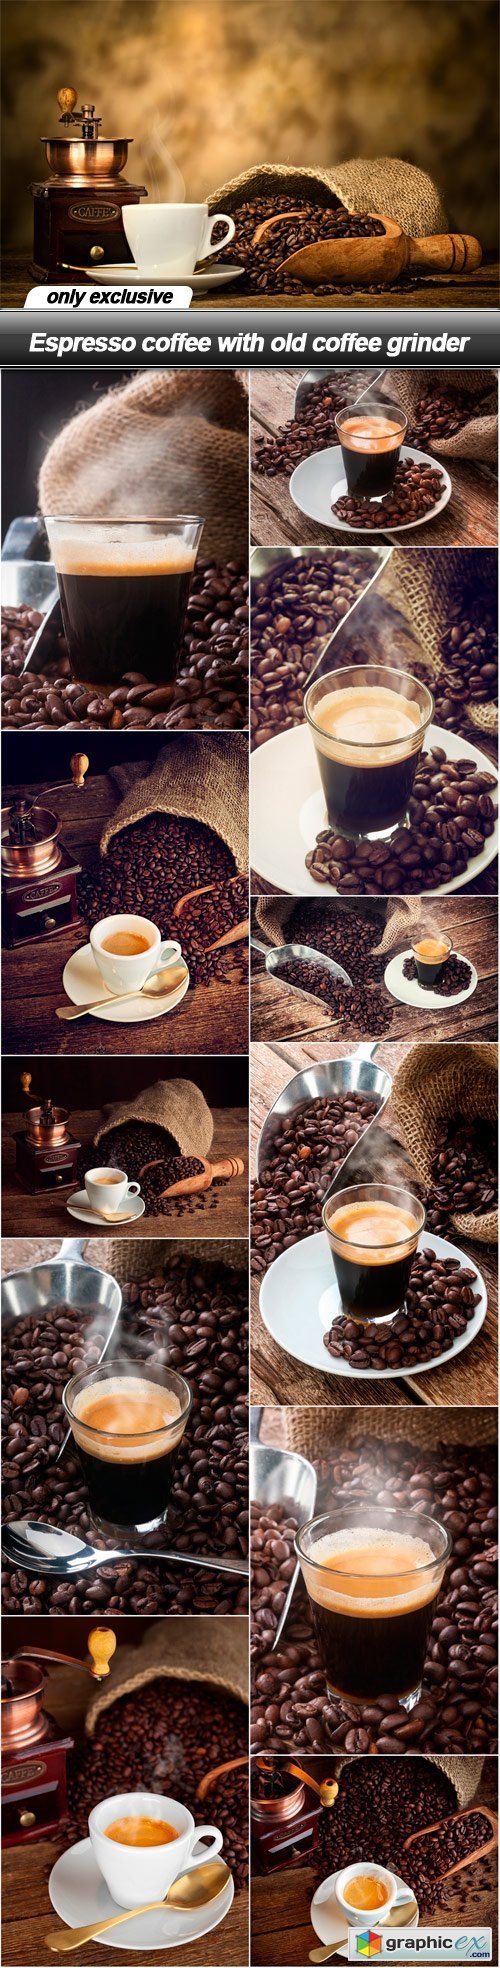 Espresso coffee with old coffee grinder - 12 UHQ JPEG